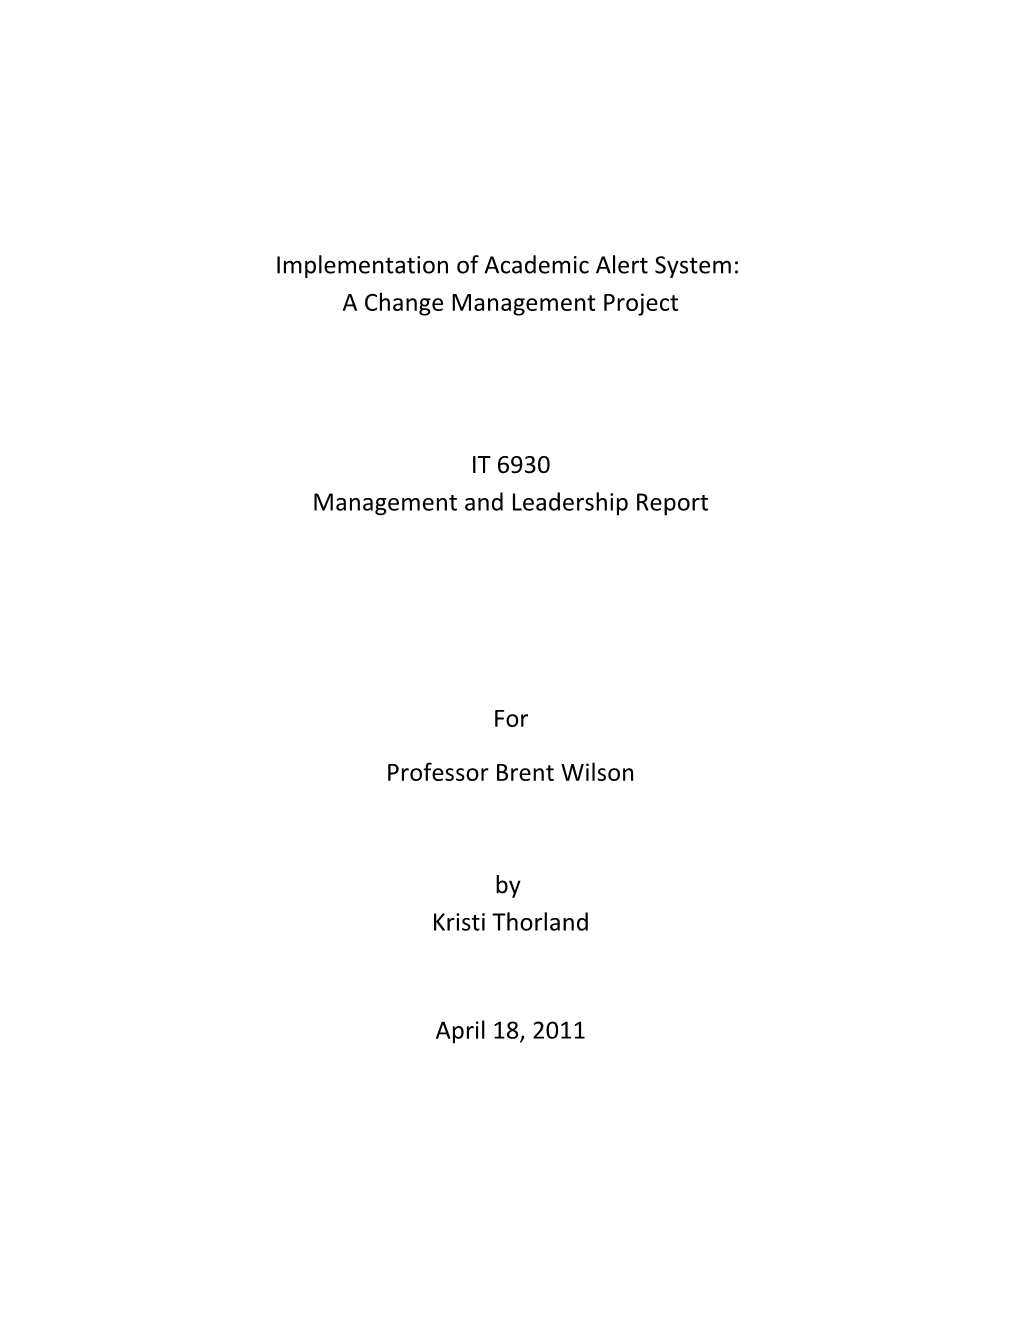 Implementation of Academic Alert System: a Change Management Project